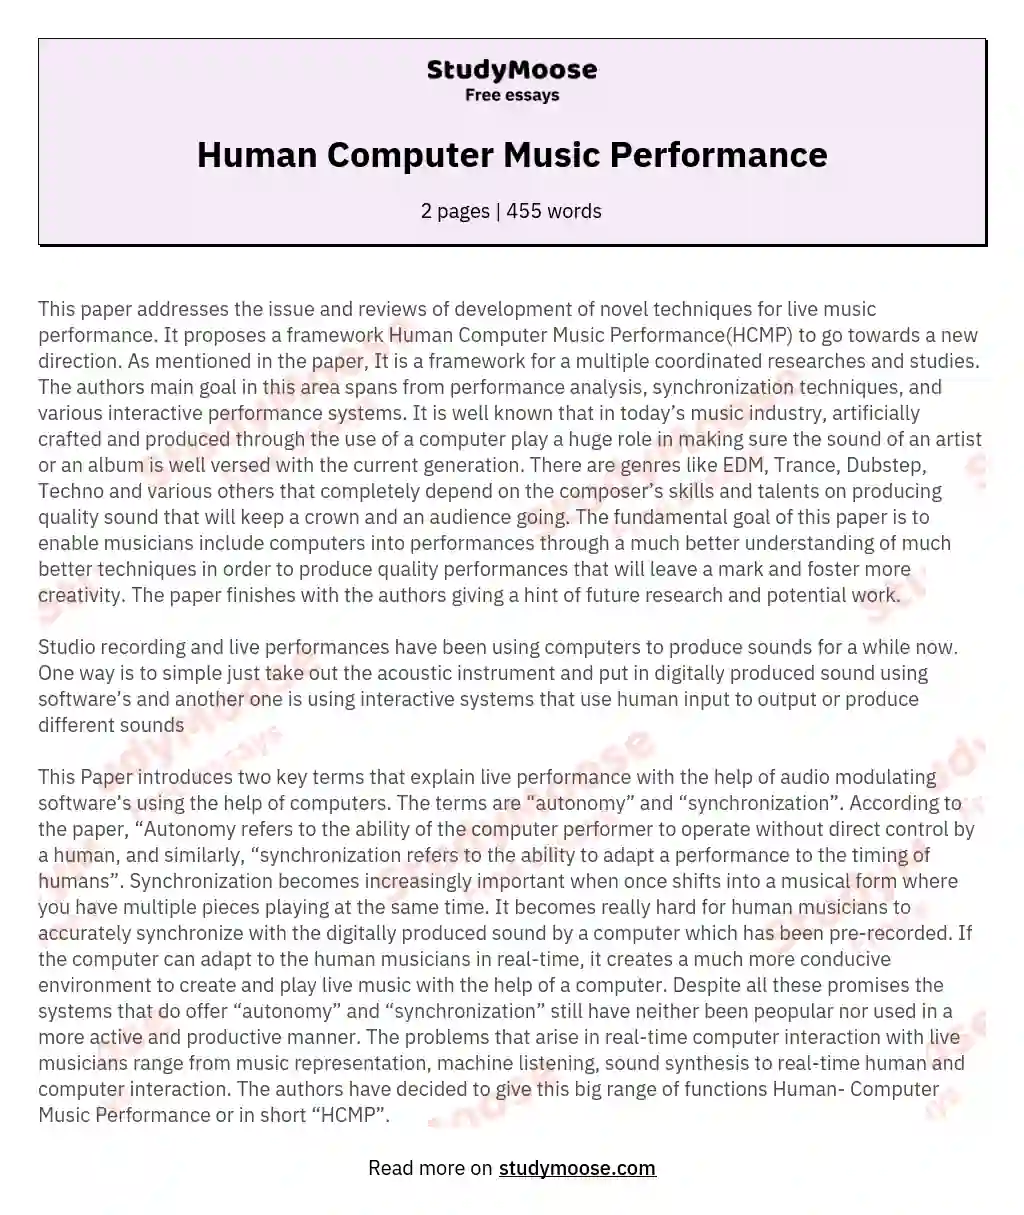 Human Computer Music Performance essay